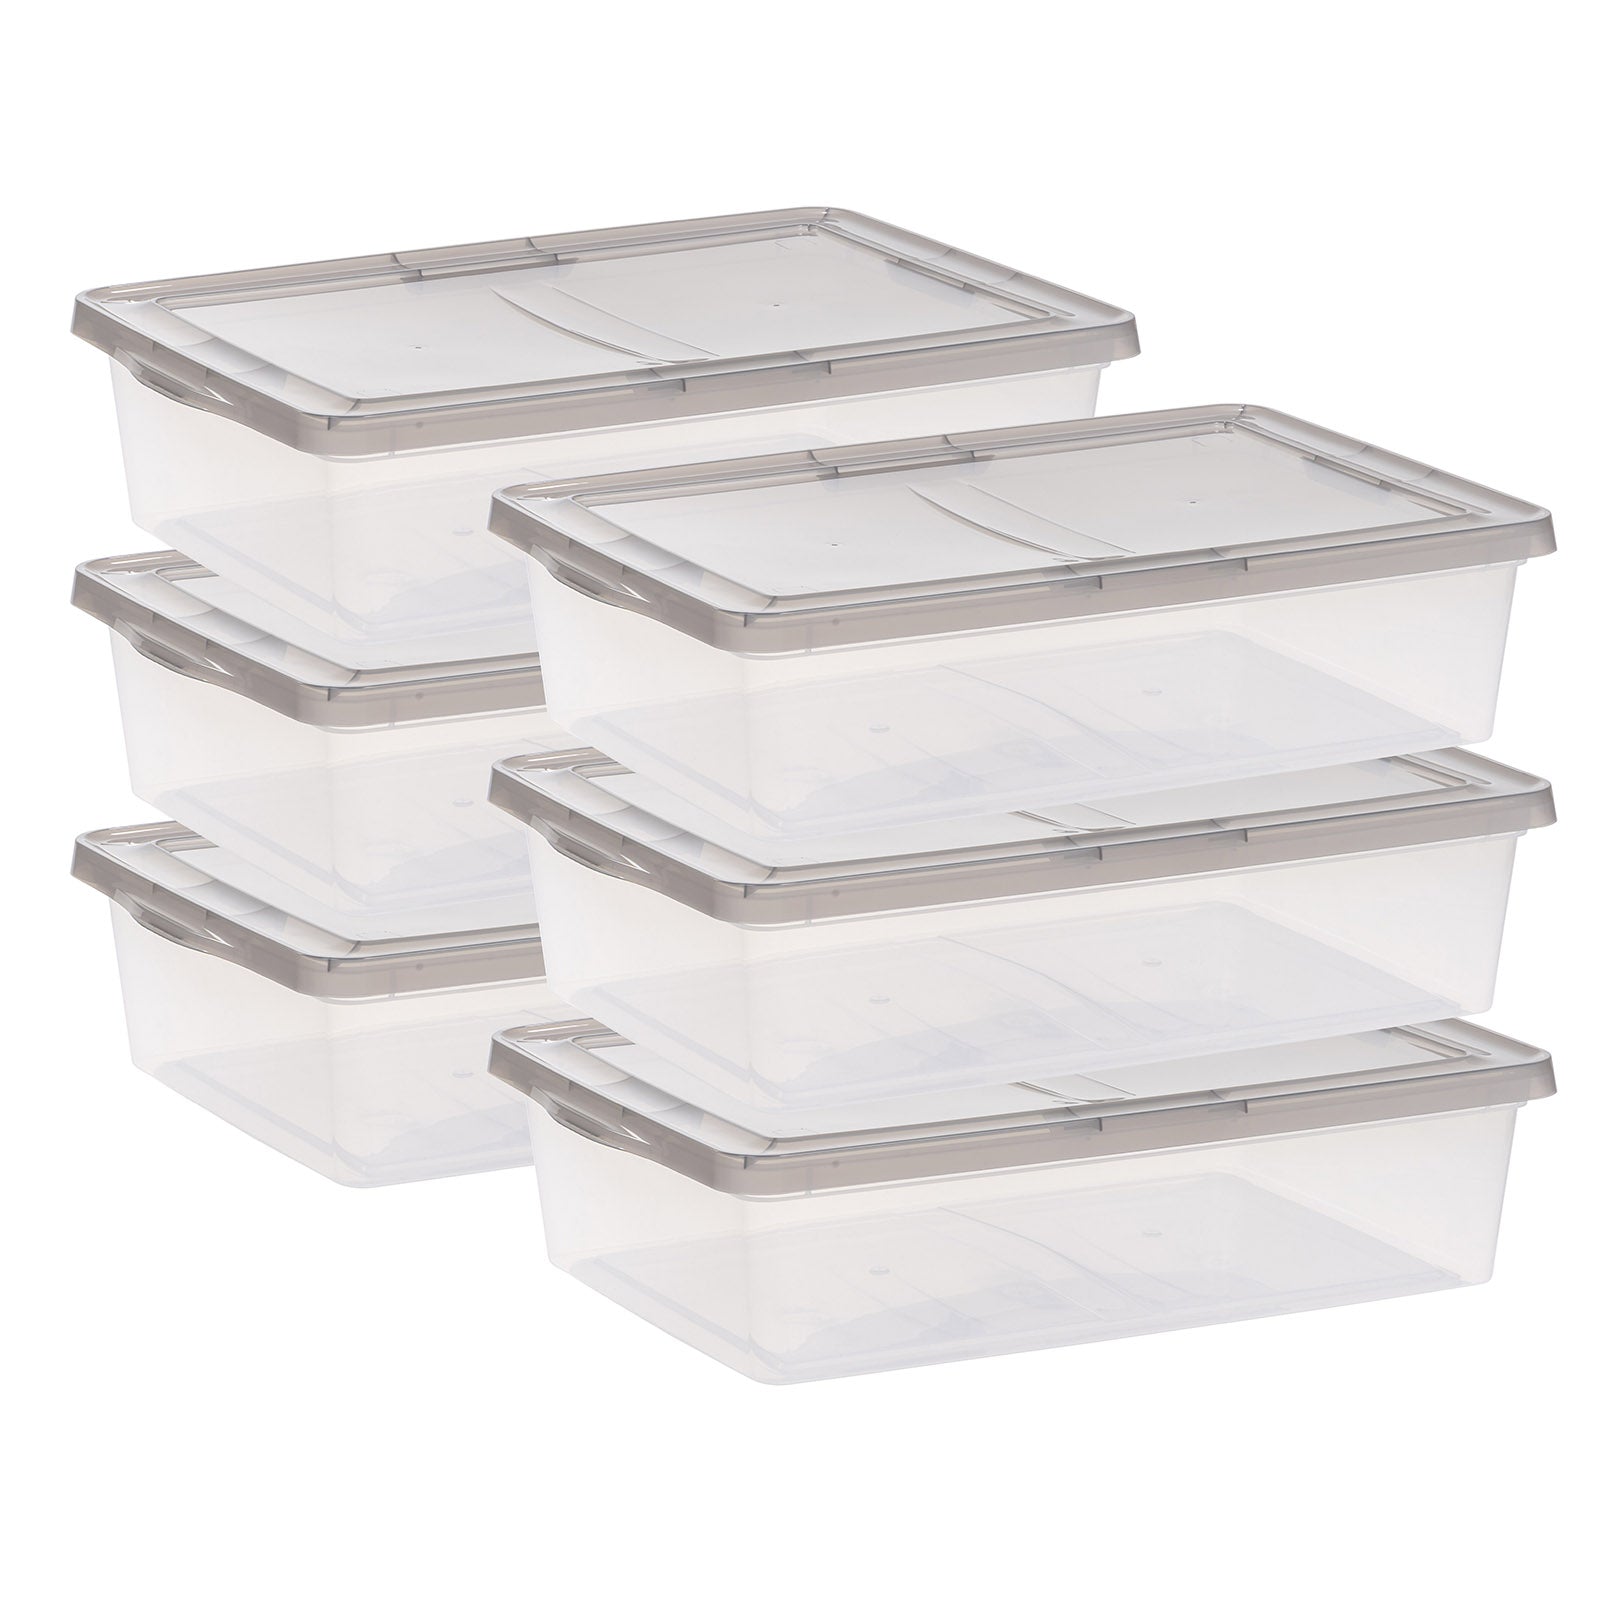 Iris 7 gal. Snap Top Plastic Storage Box in Clear wih Gray Lid 6 Pack